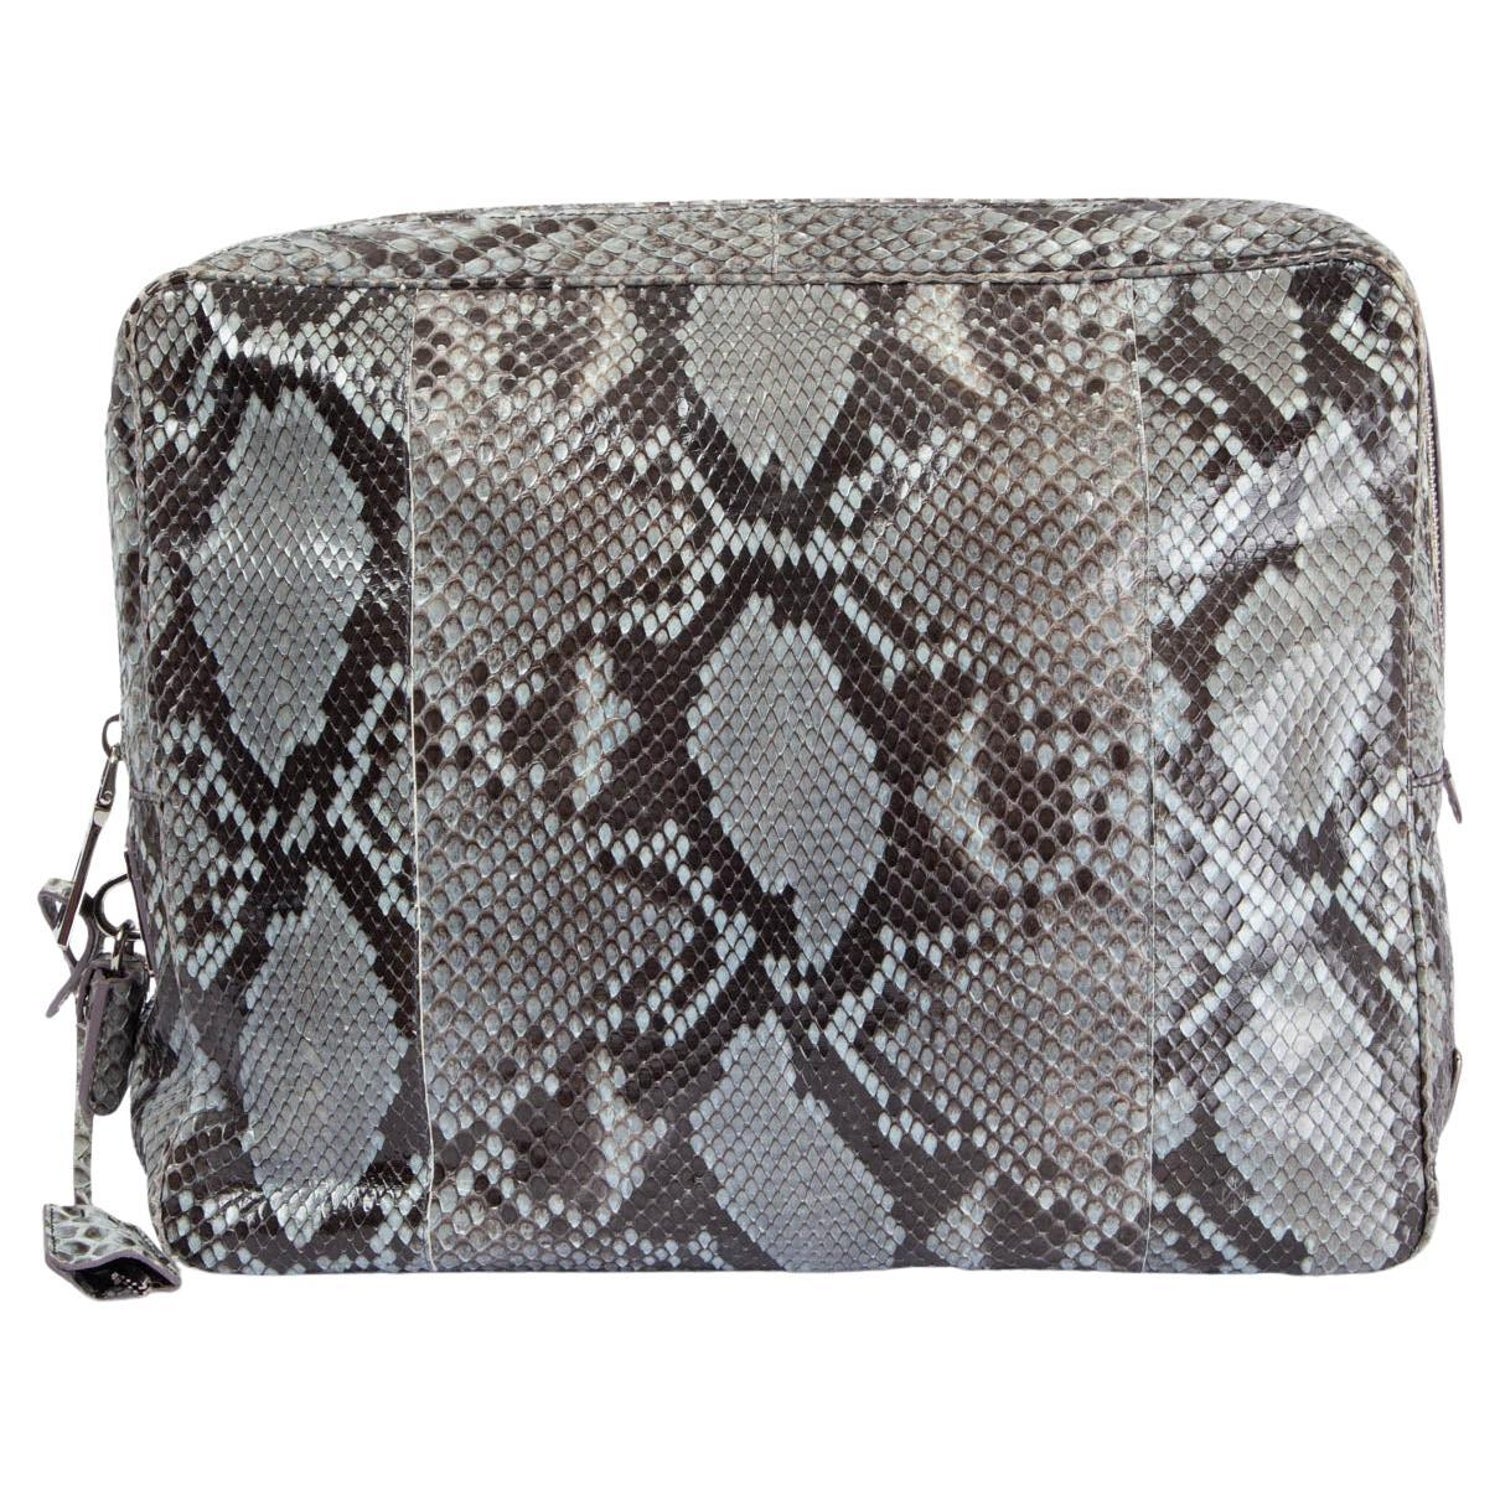 Prada Small Nylon and Snake Shoulder Bag - Ann's Fabulous Closeouts